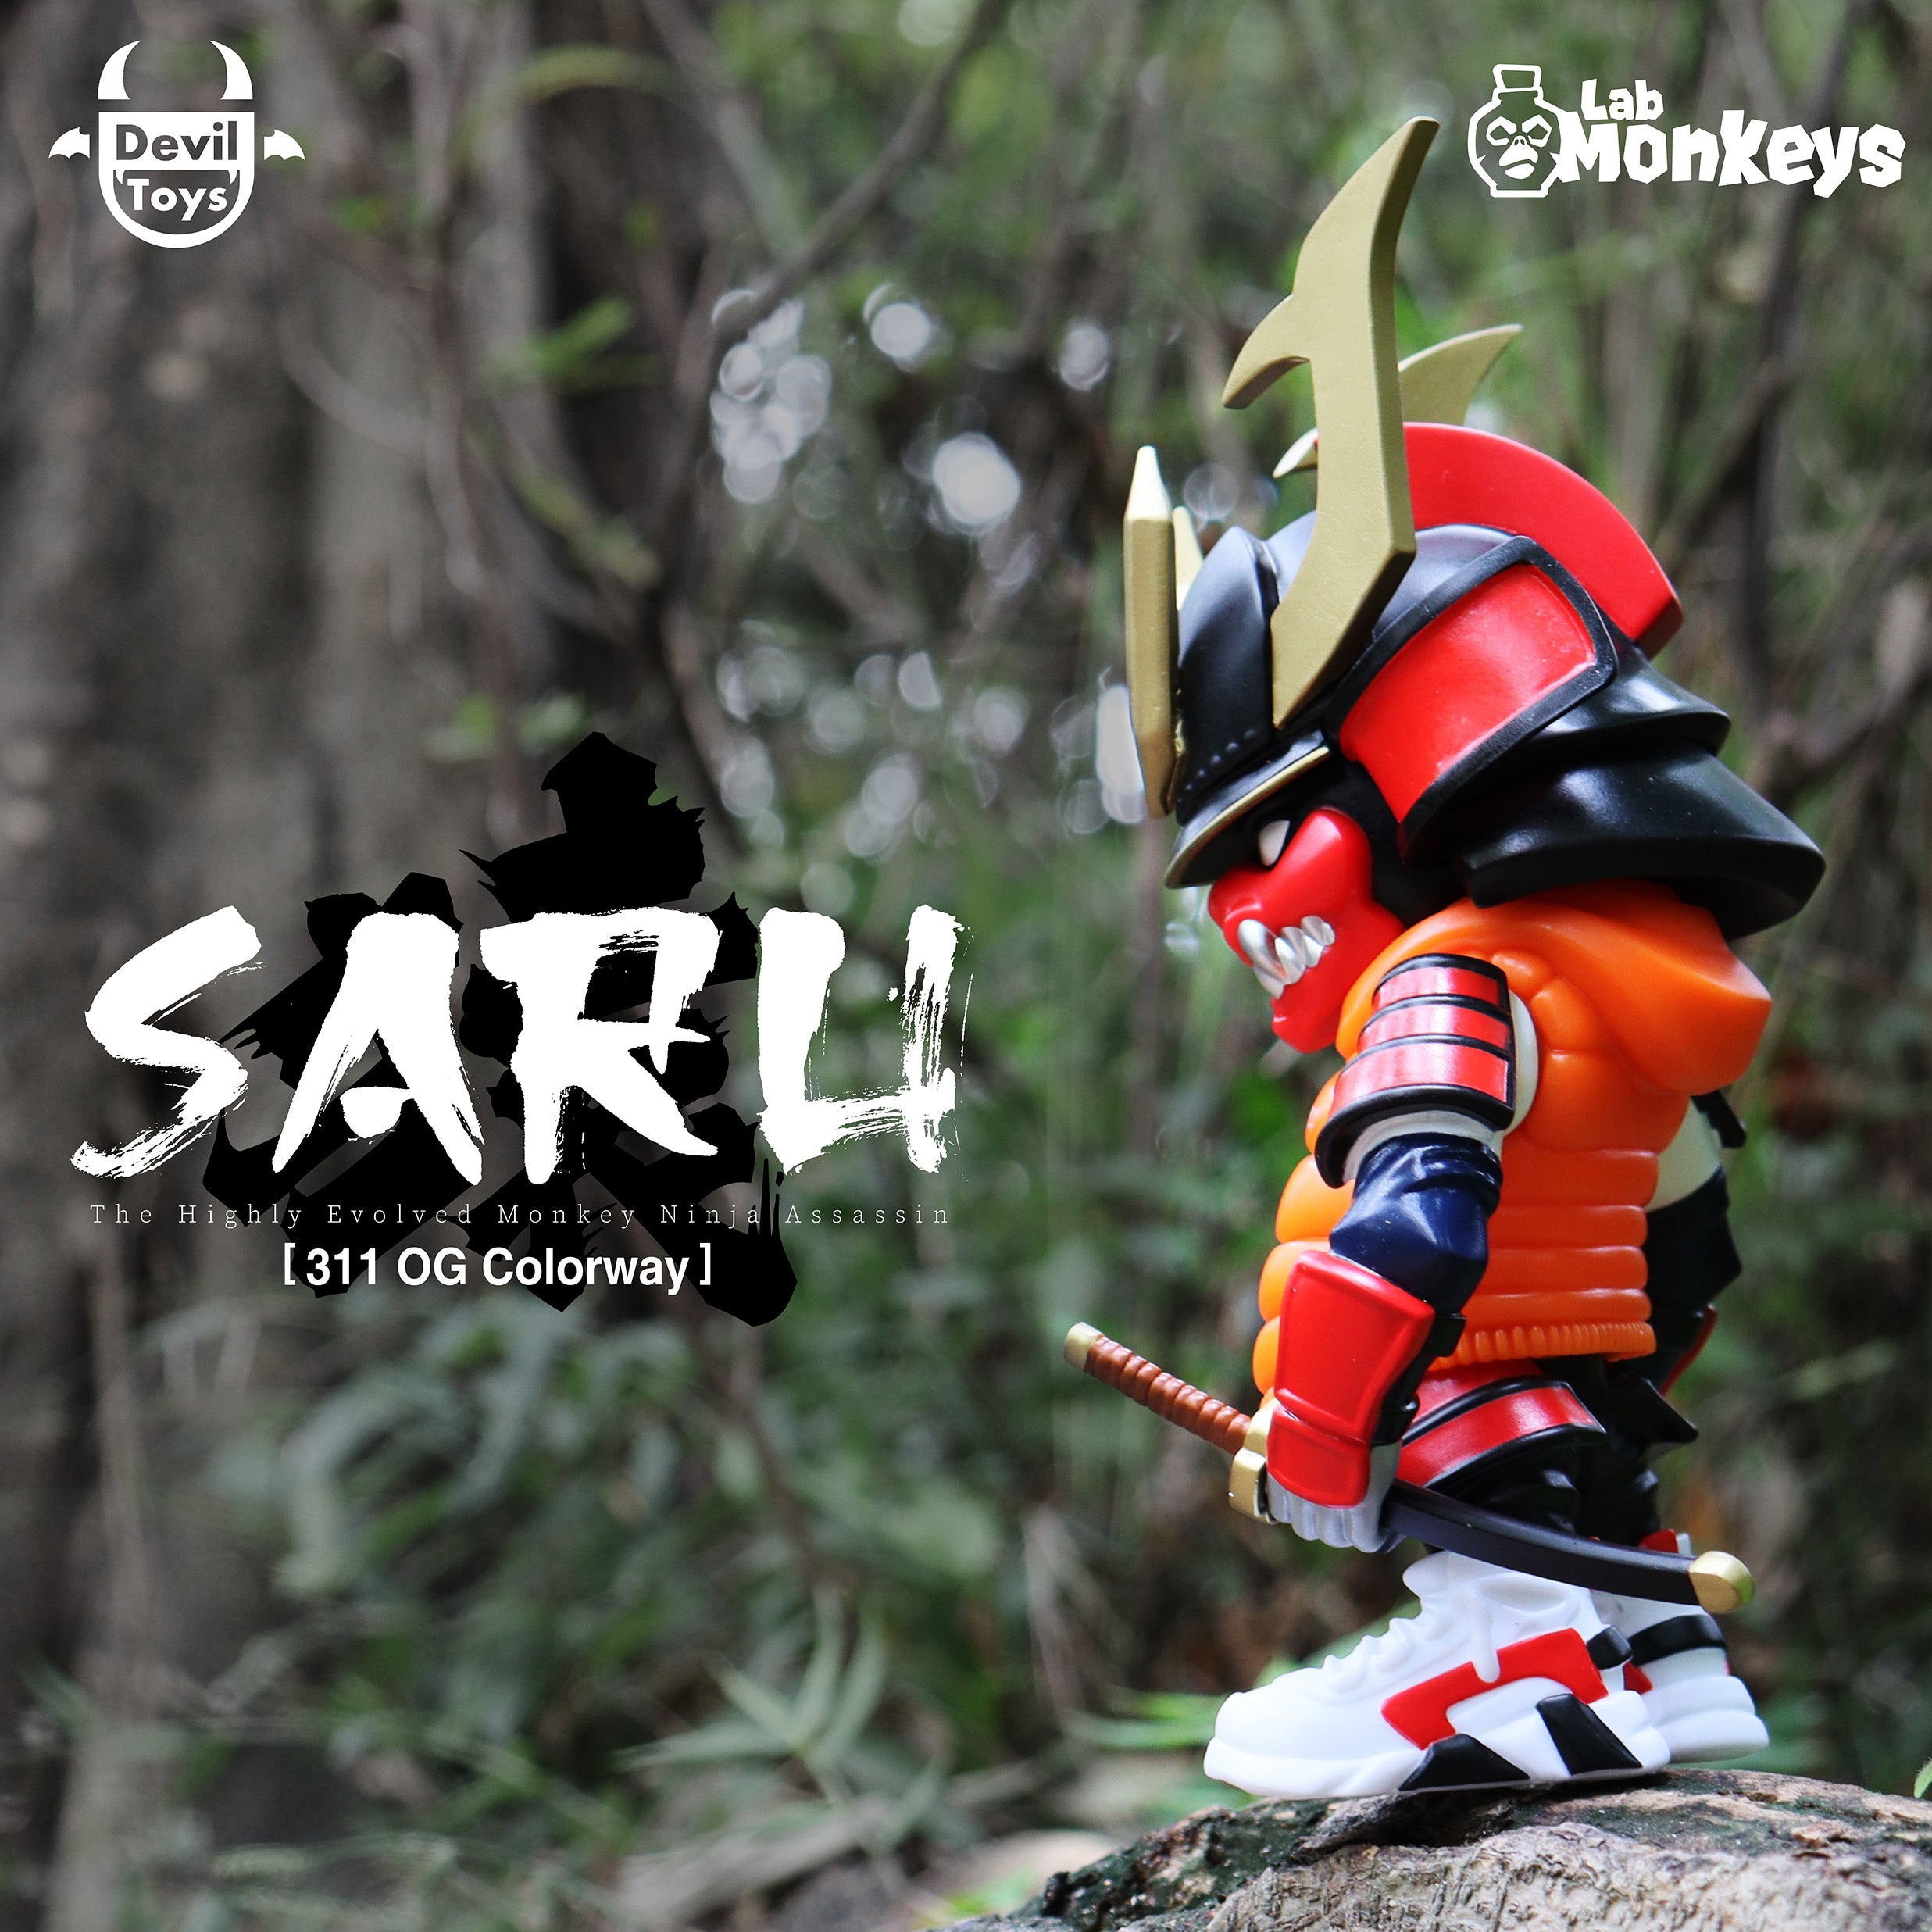 SARU 311 OG Edition by Lab Monkeys